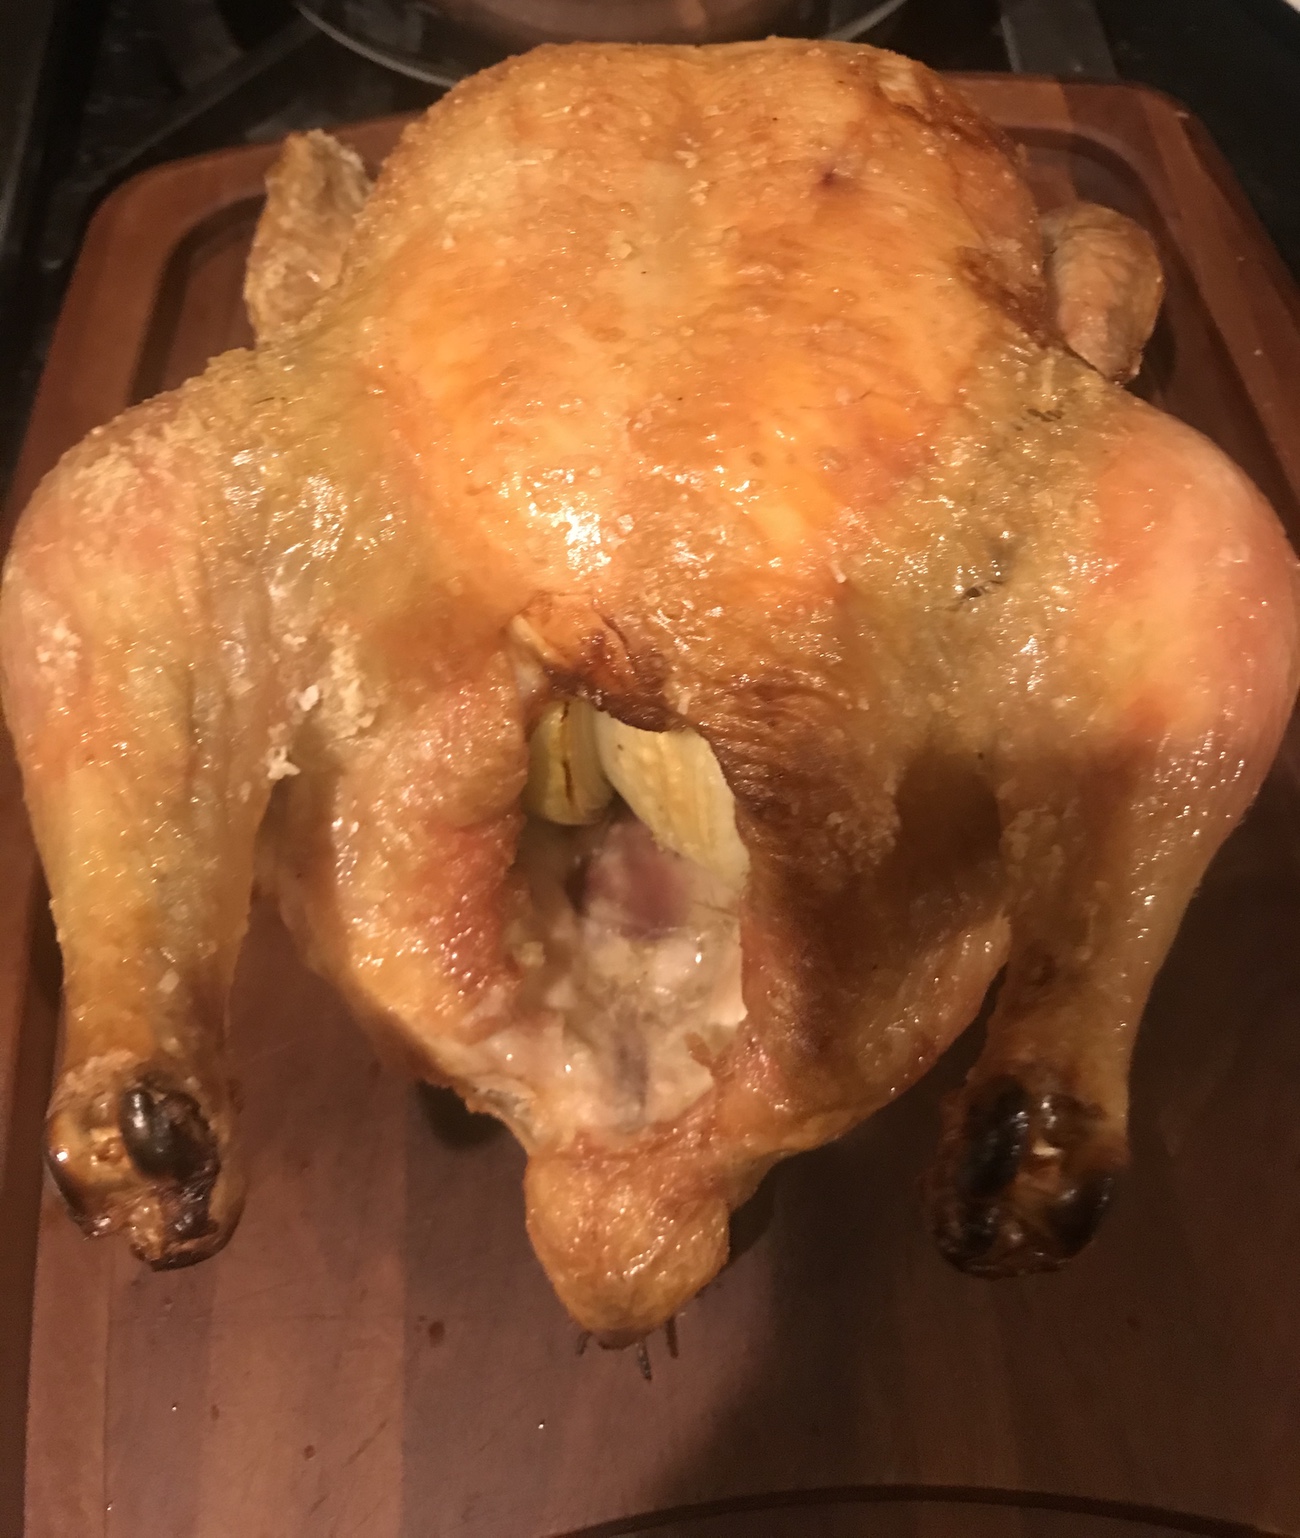 Plague 3: Roast Chicken